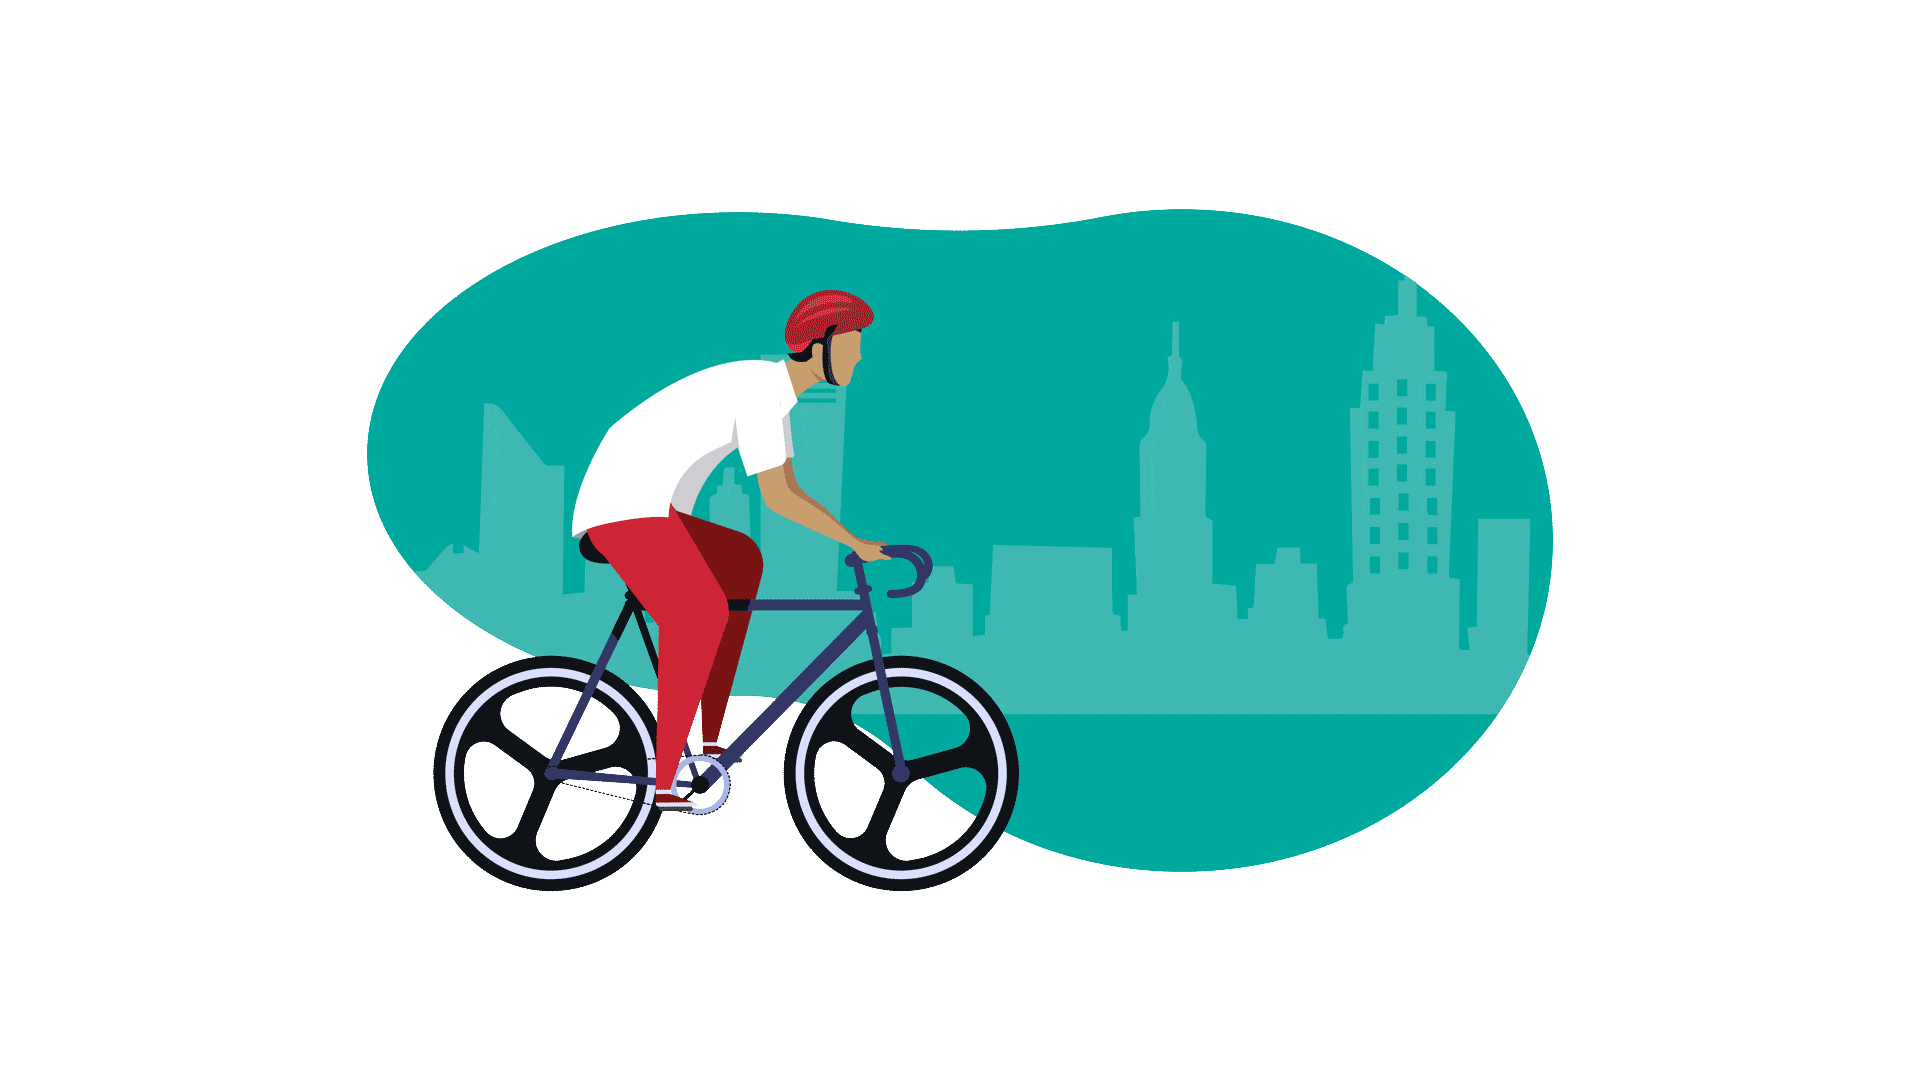 man biking through city as low-risk summer activity during coronavirus